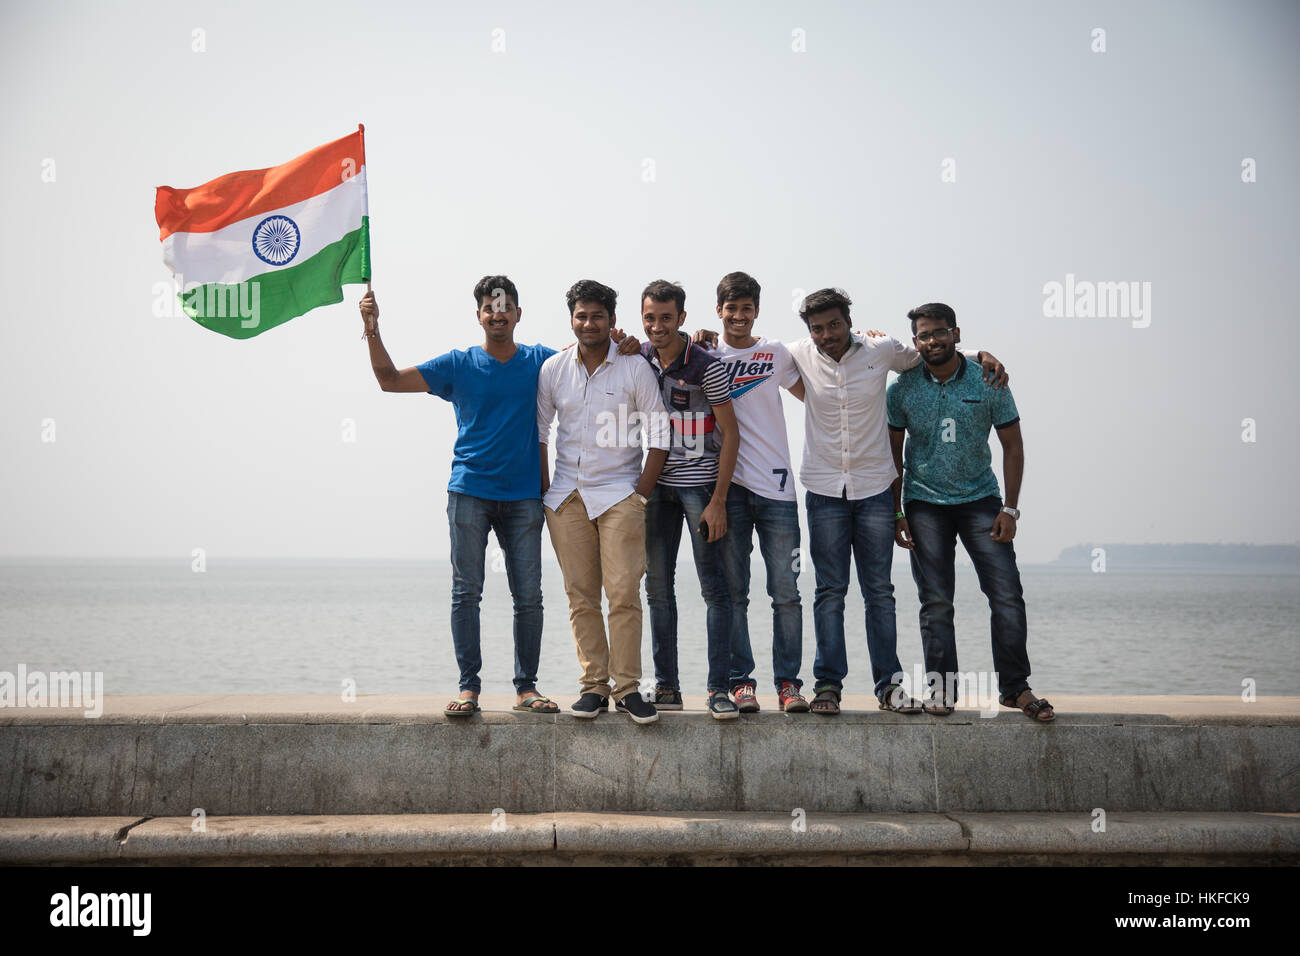 People celebrate Republic Day on Marine Drive in Mumbai (Bombay), India. Stock Photo